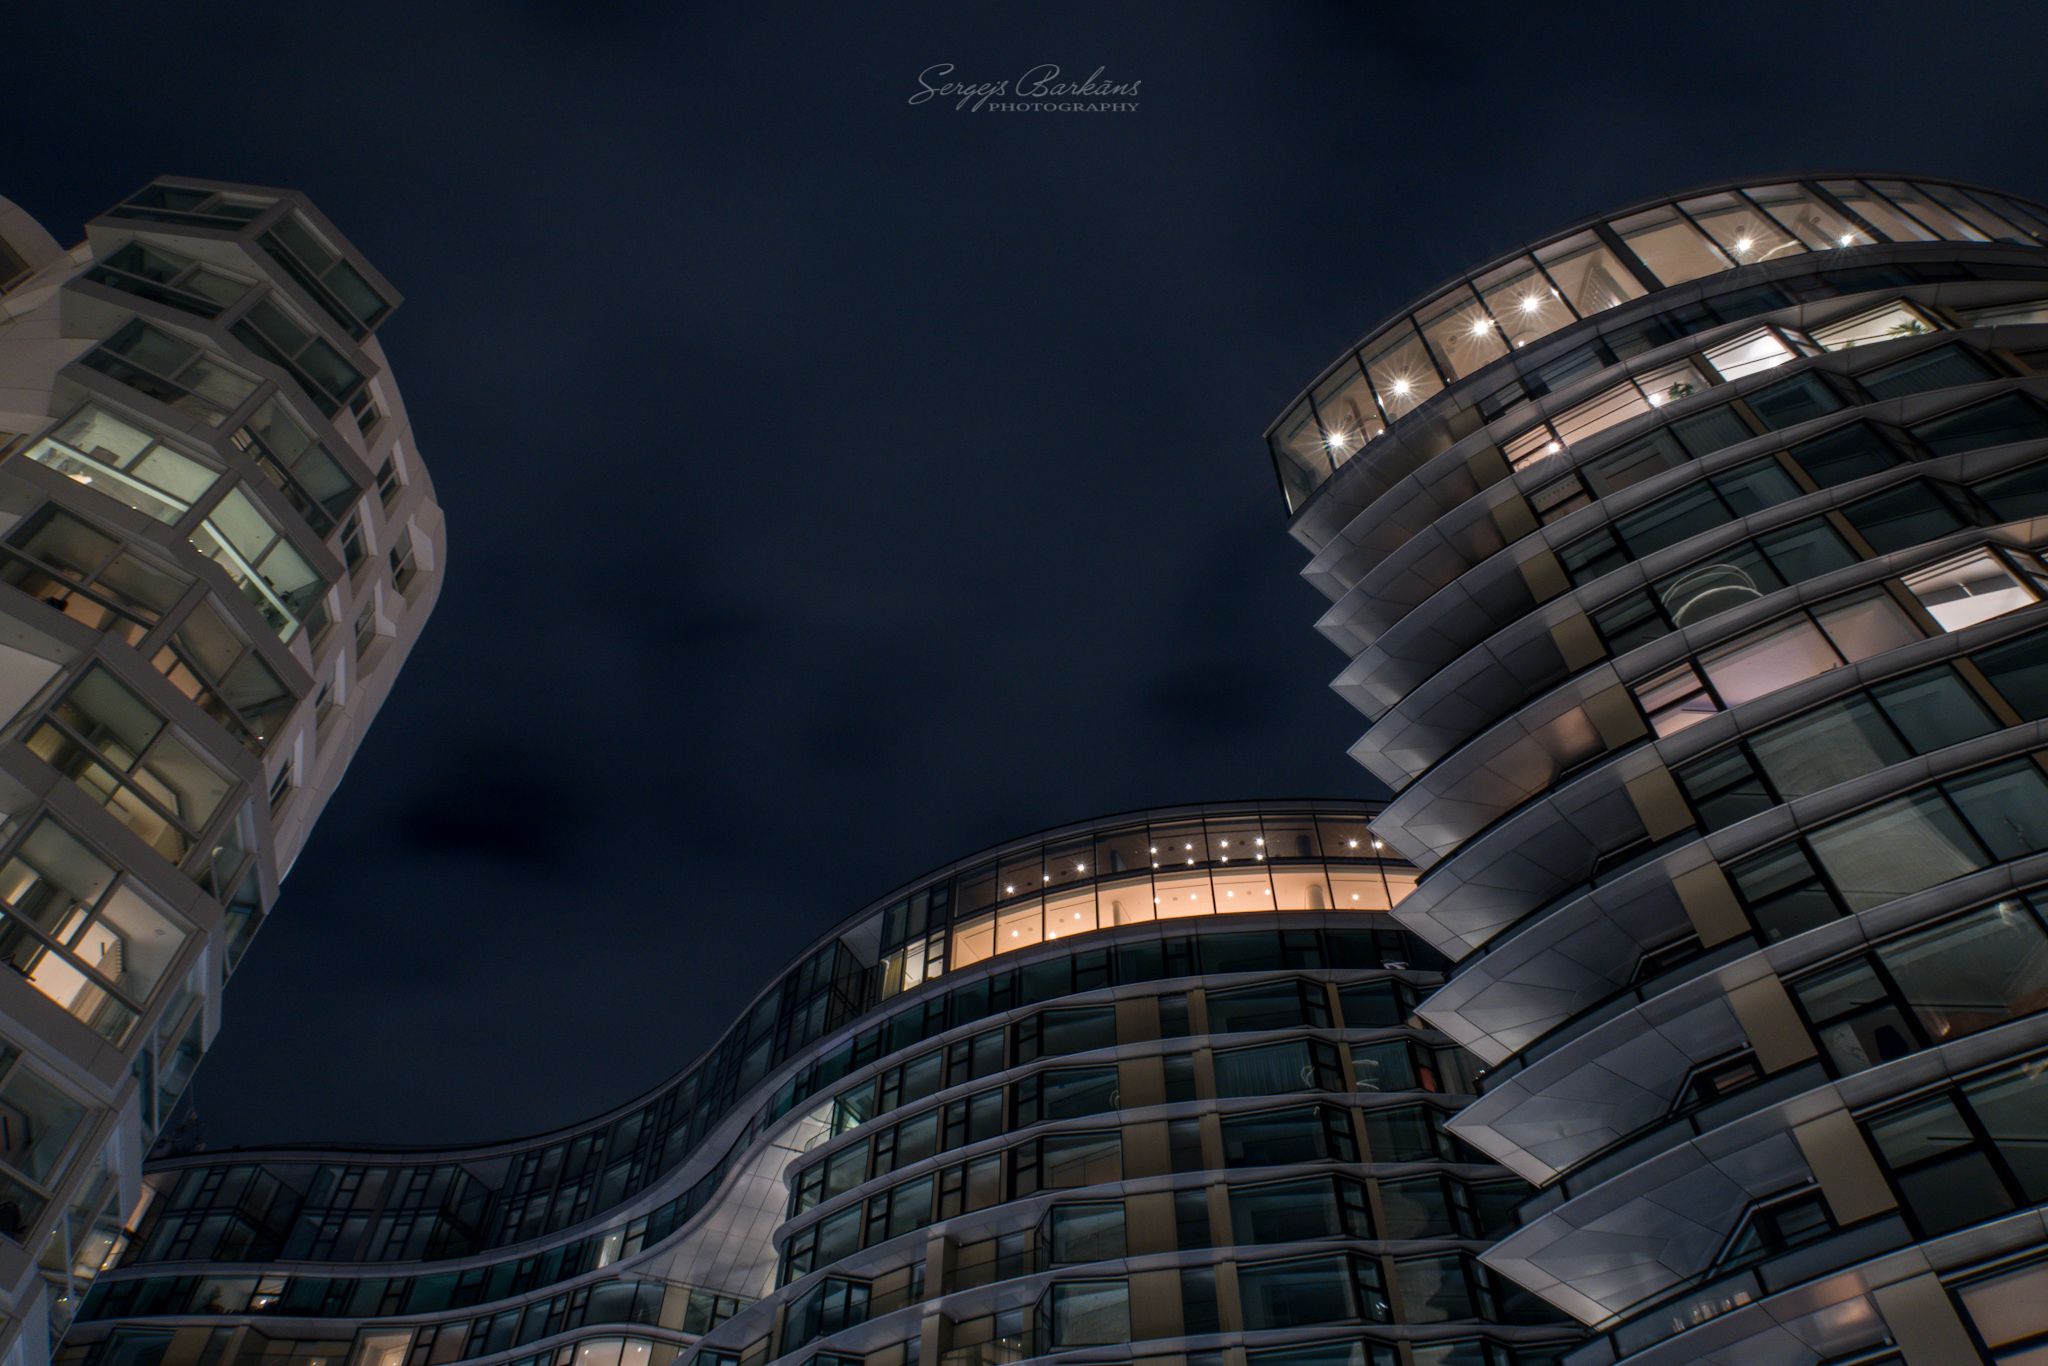 #night #longexposure #london #architecture #england #building, Sergejs Barkans